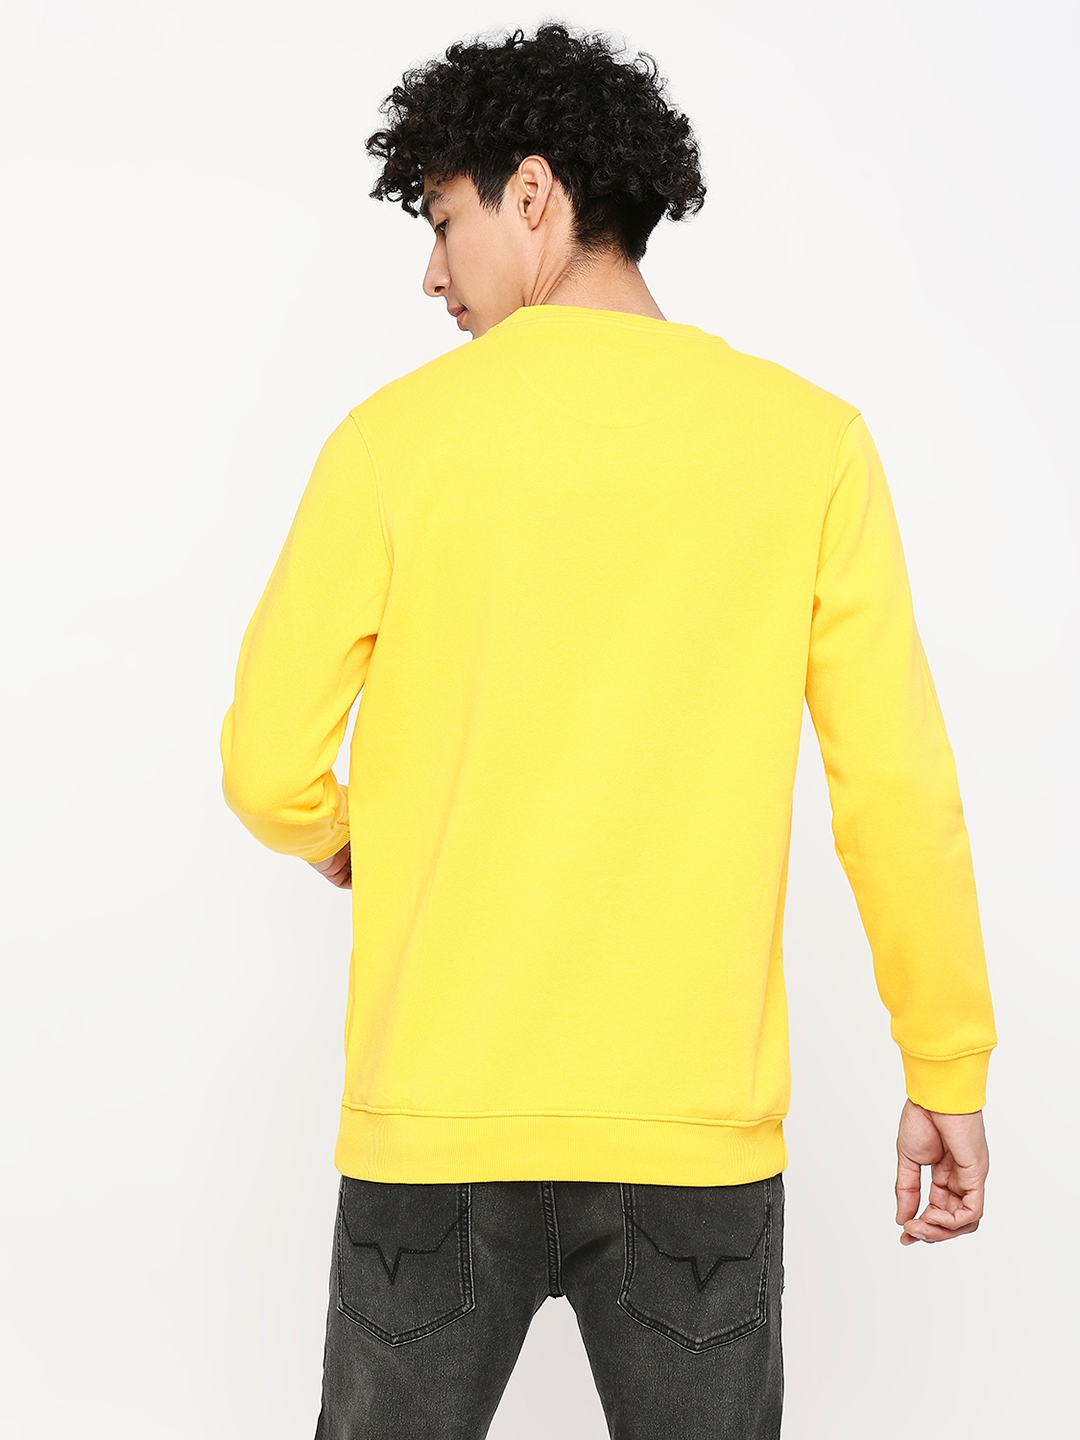 spykar | Spykar Chrome Yellow Cotton Full Sleeve Round Neck Sweatshirt For Men 3